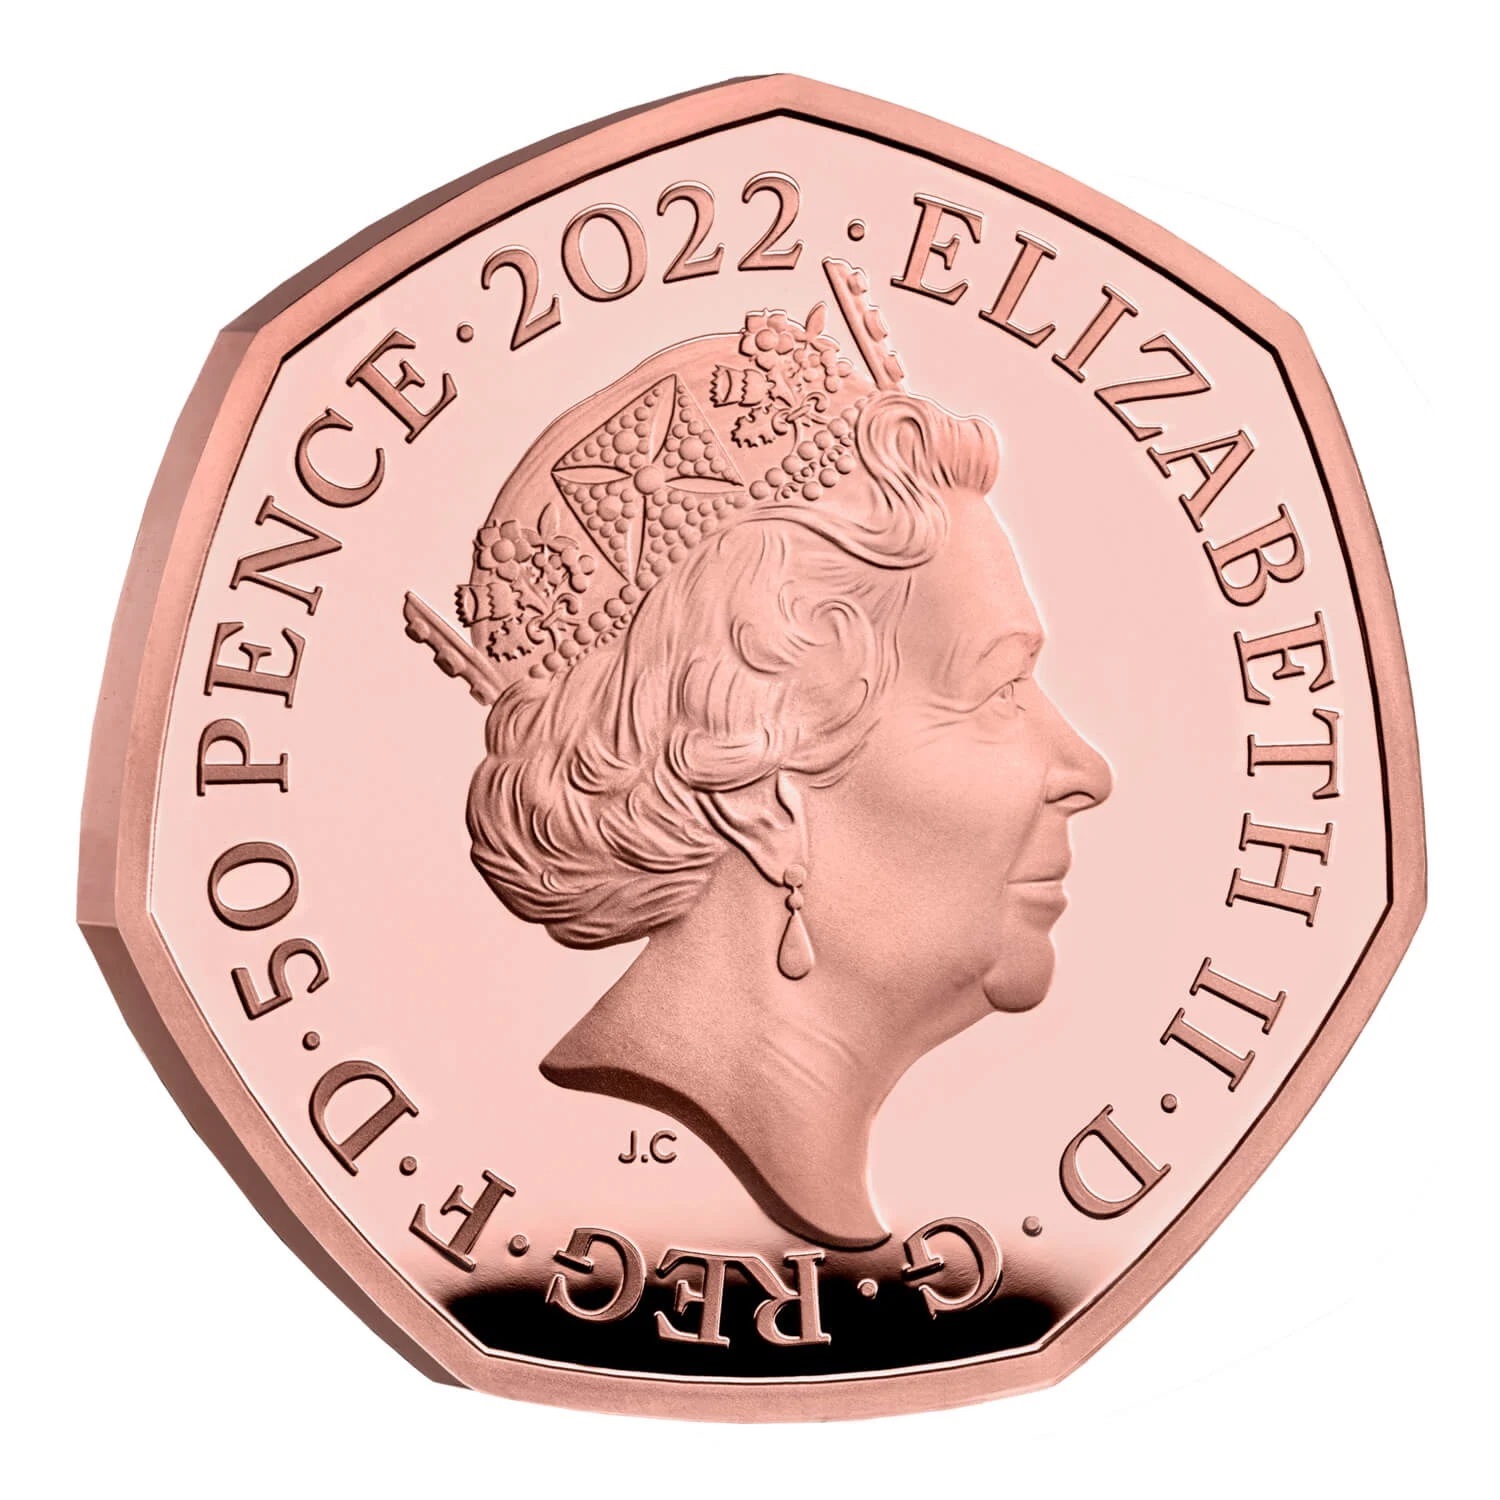 (W185.50.P.2022.UK22CGGP) 50 Pence Birmingham Commonwealth Games 2022 - Proof gold Obverse (zoom)